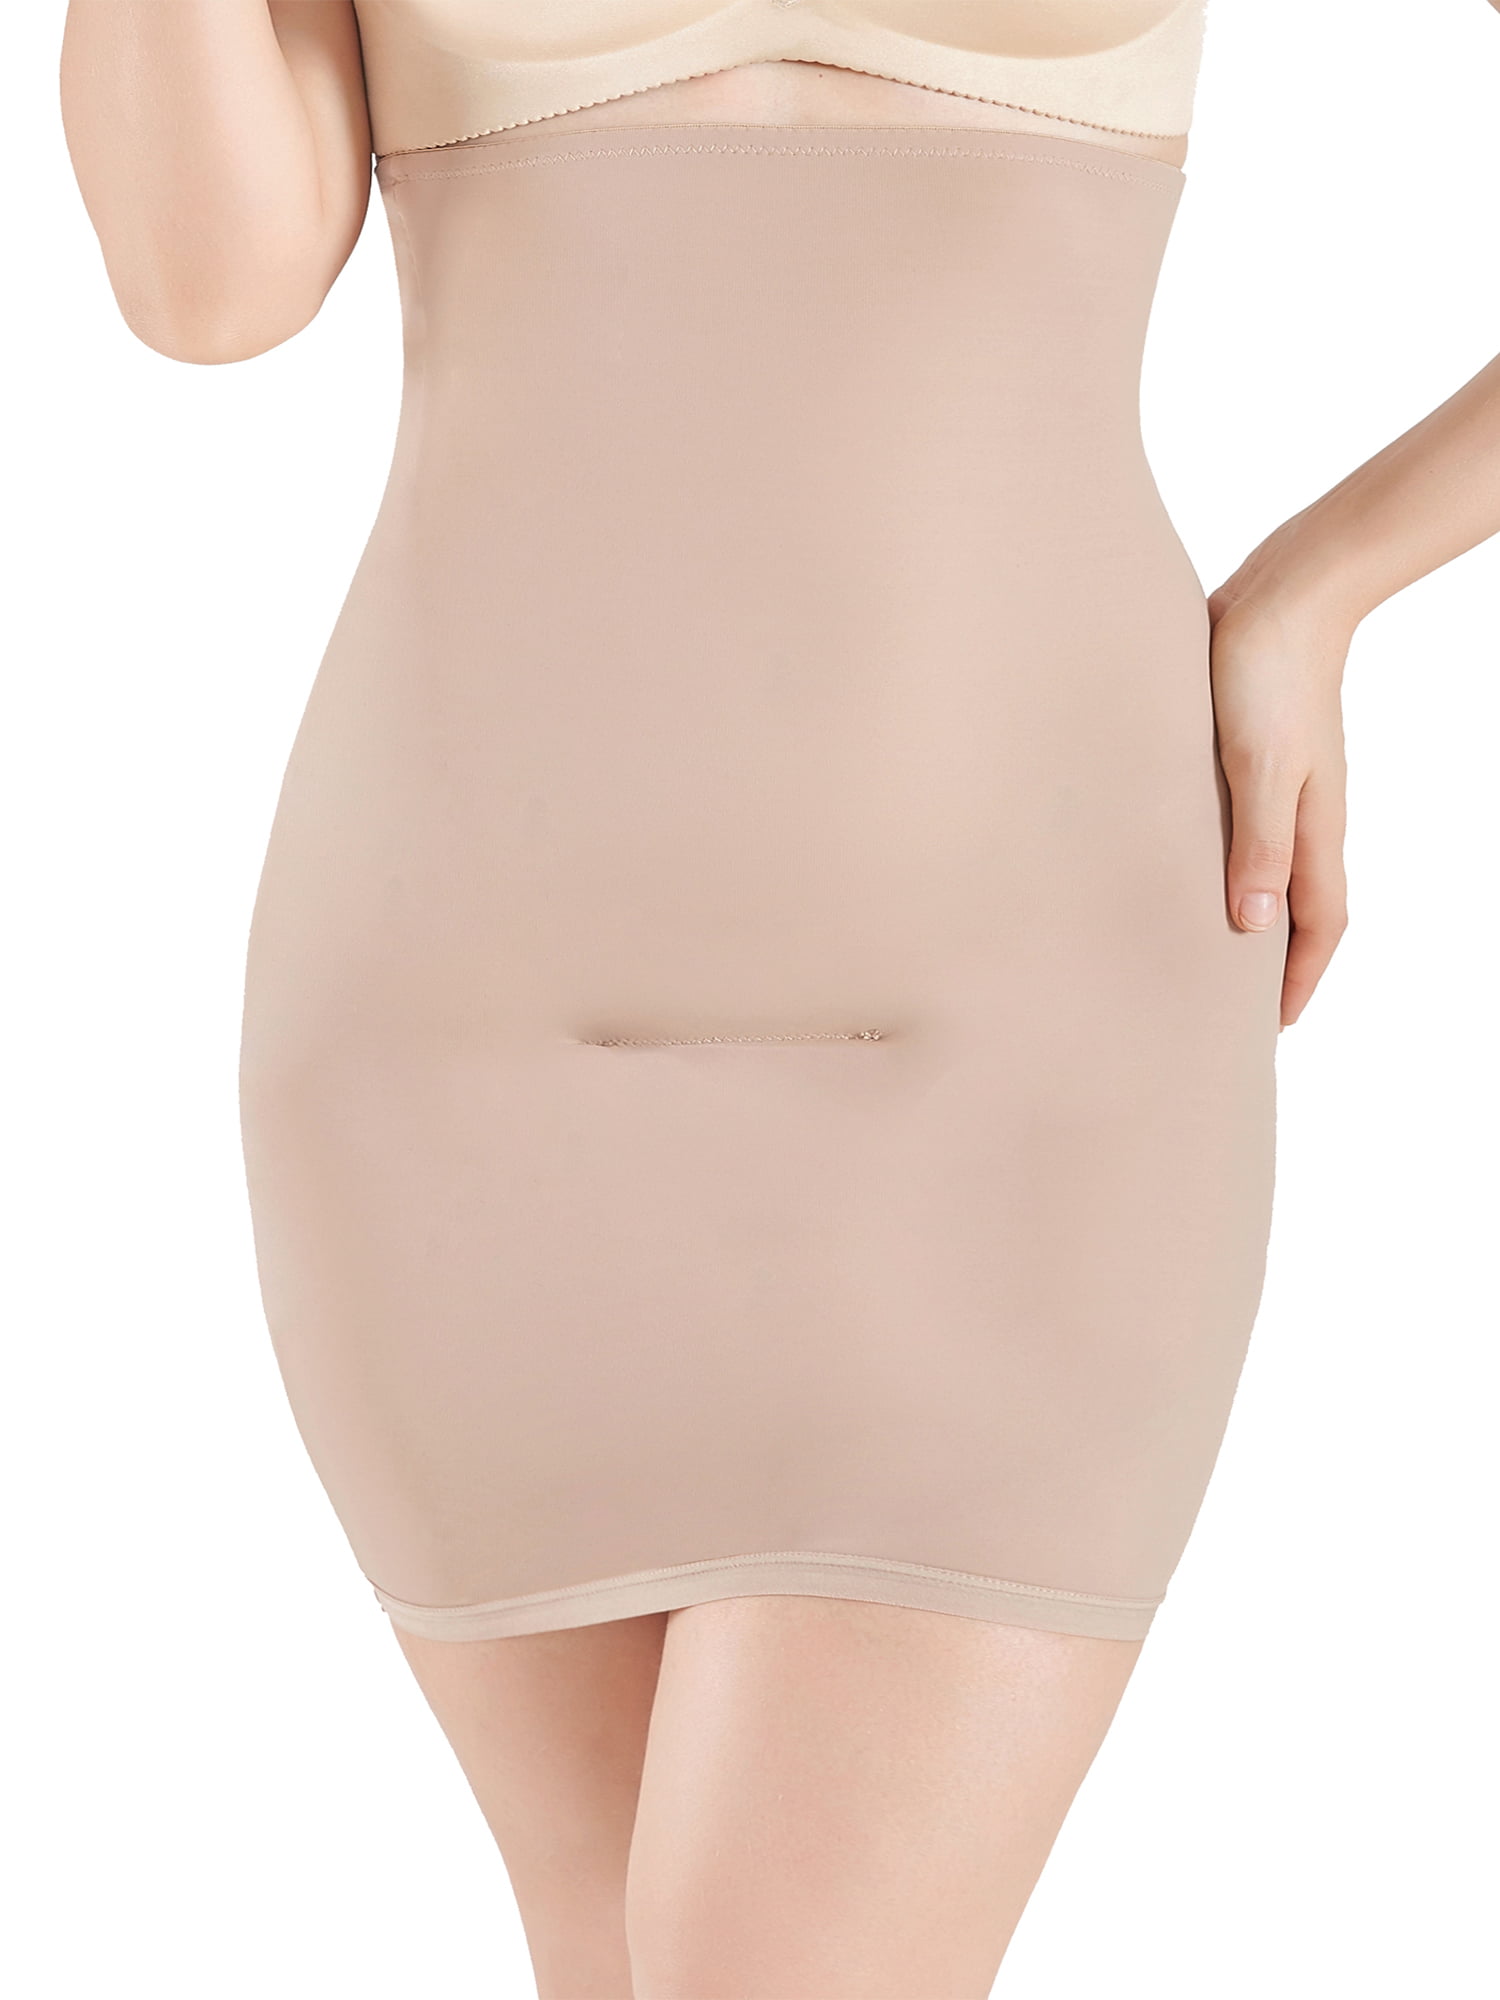 InstantFigure Womens Compression Shapewear Tummy Control Half Slip